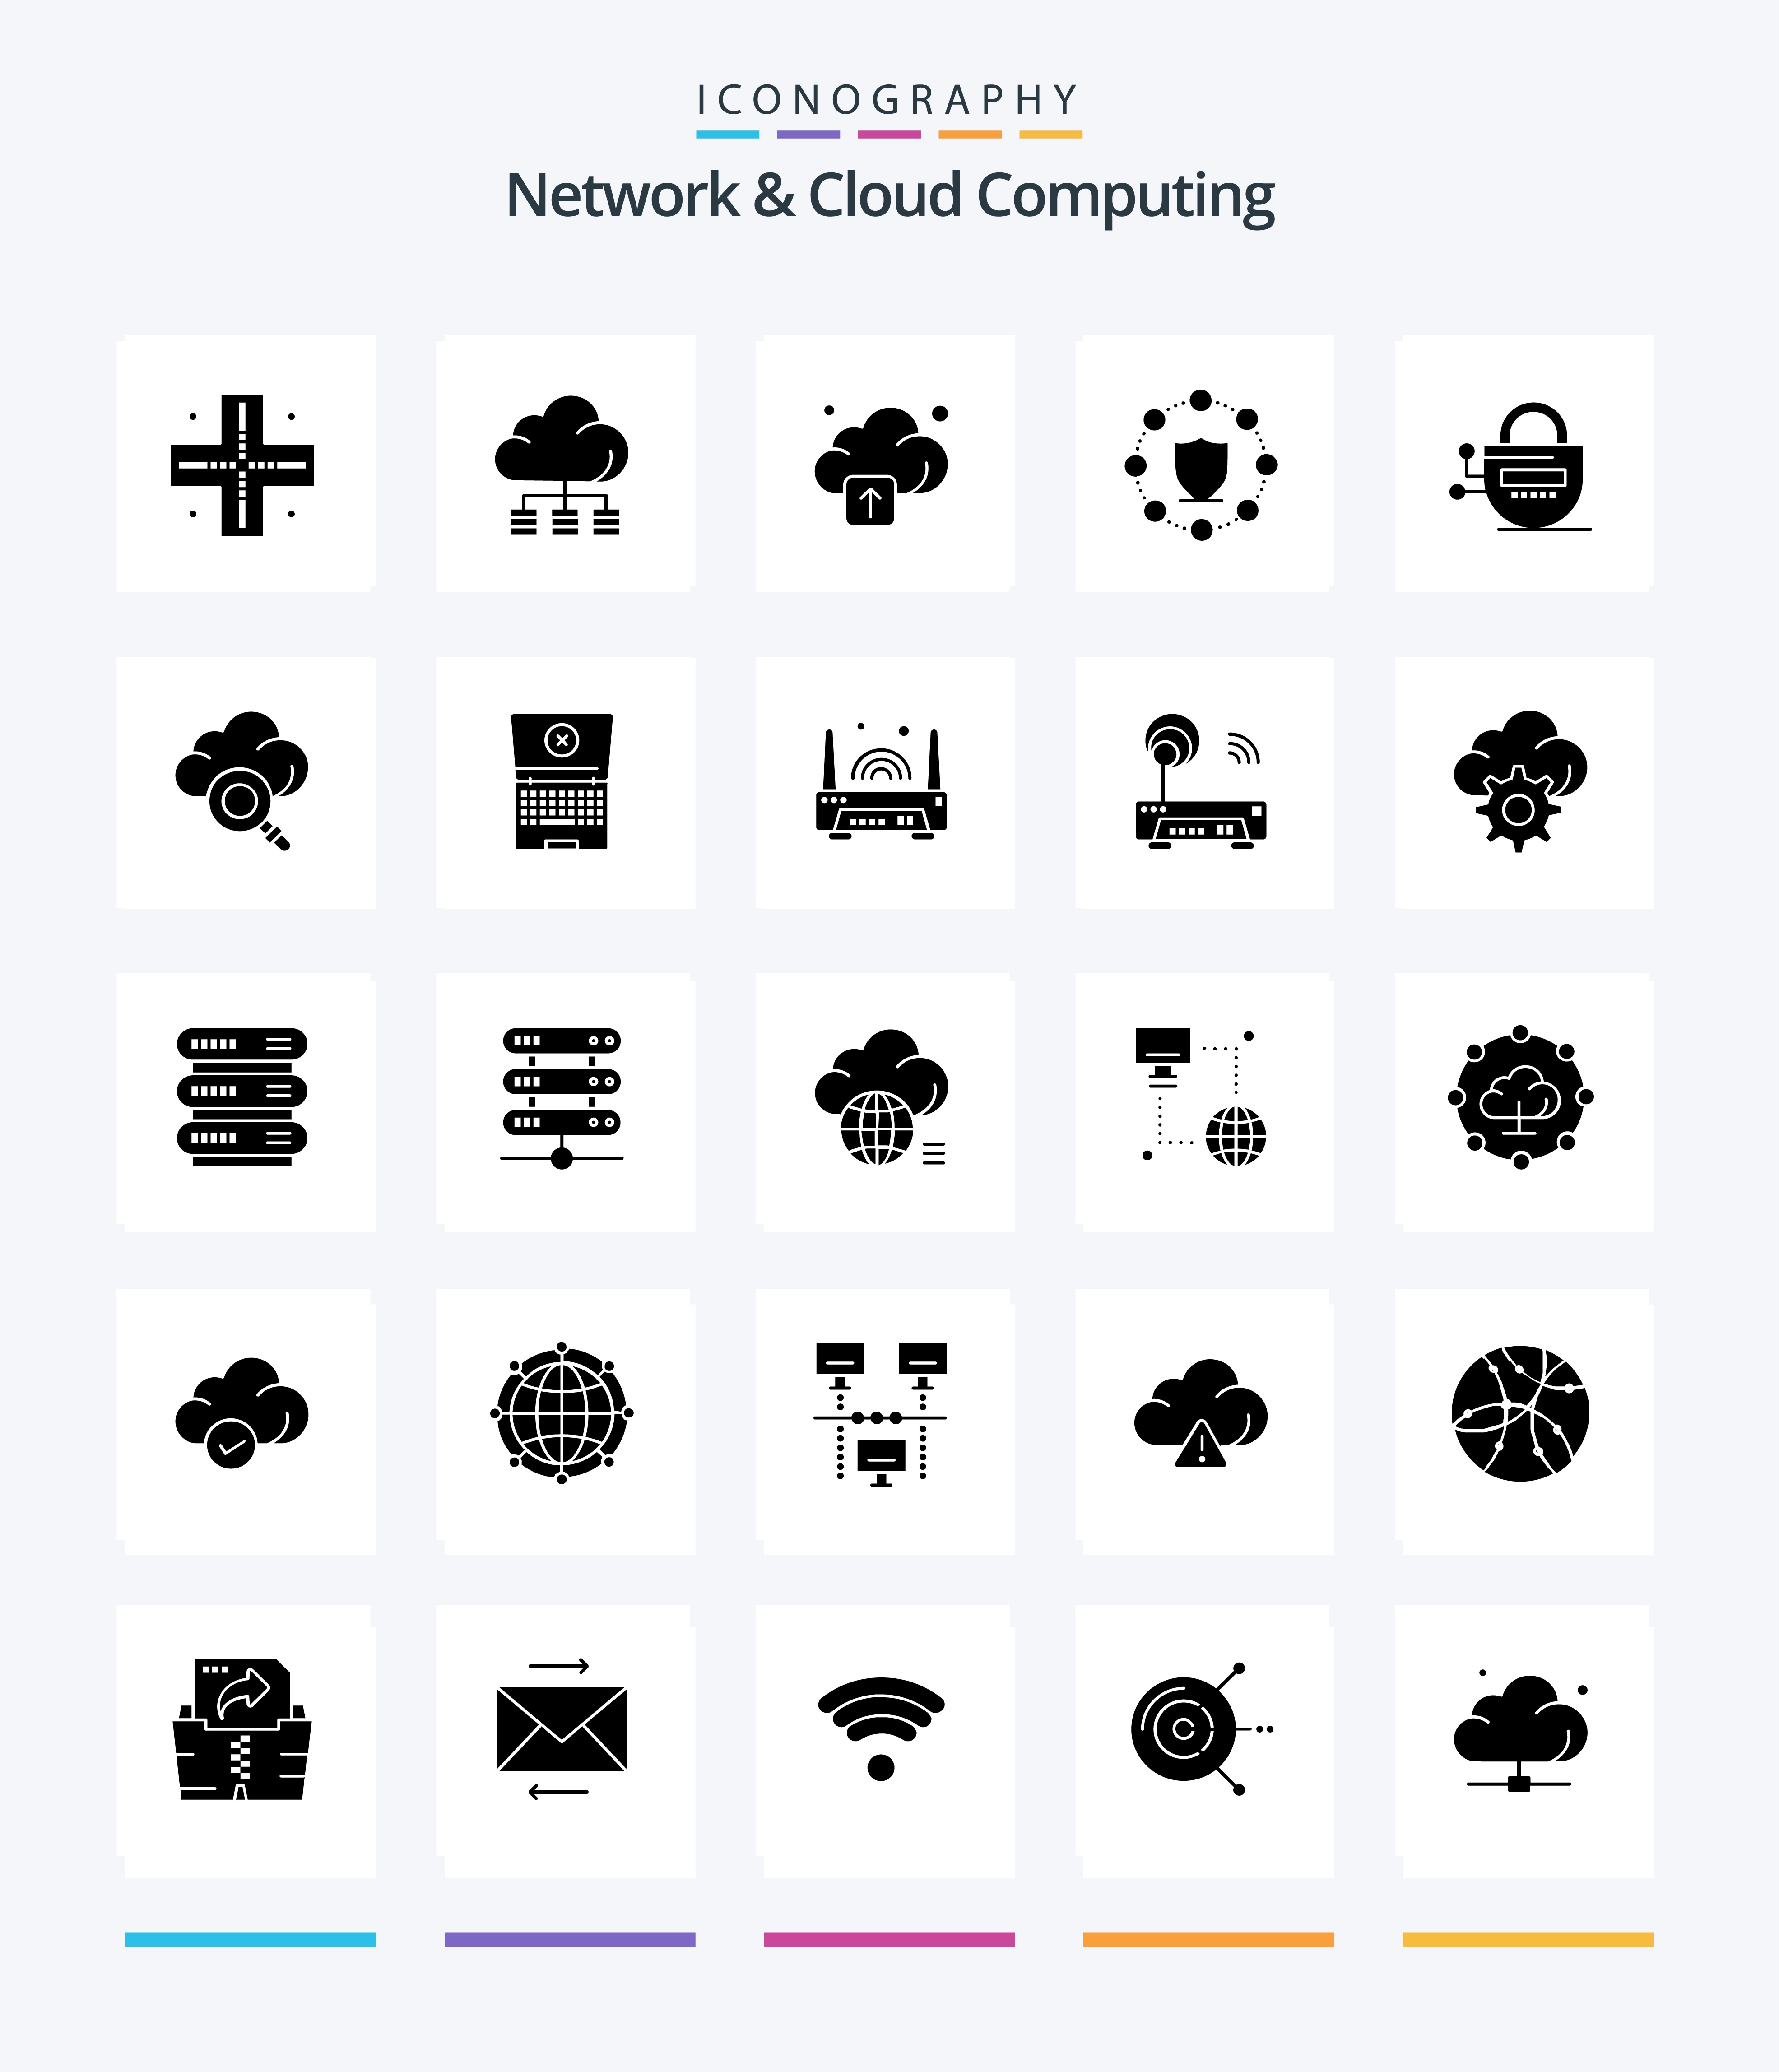 Cloud Computing icons